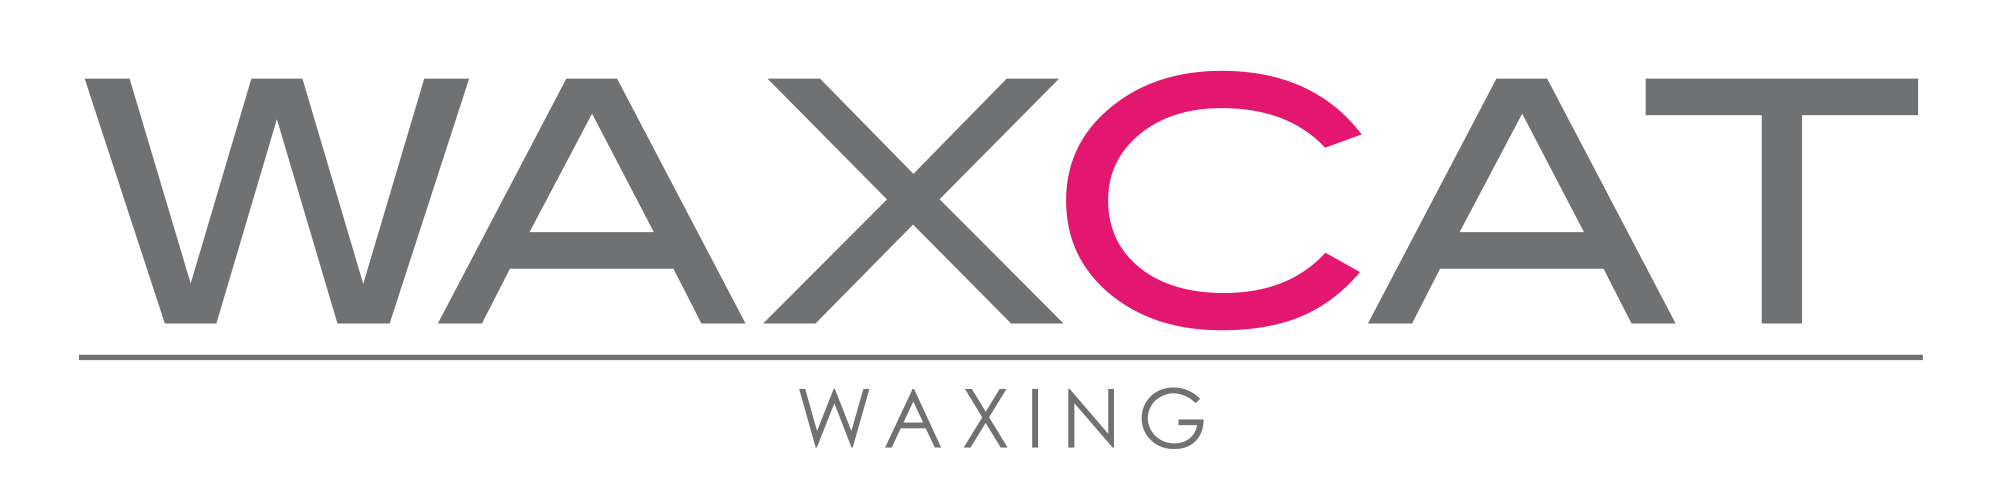 Waxcat Gmbh  Logo